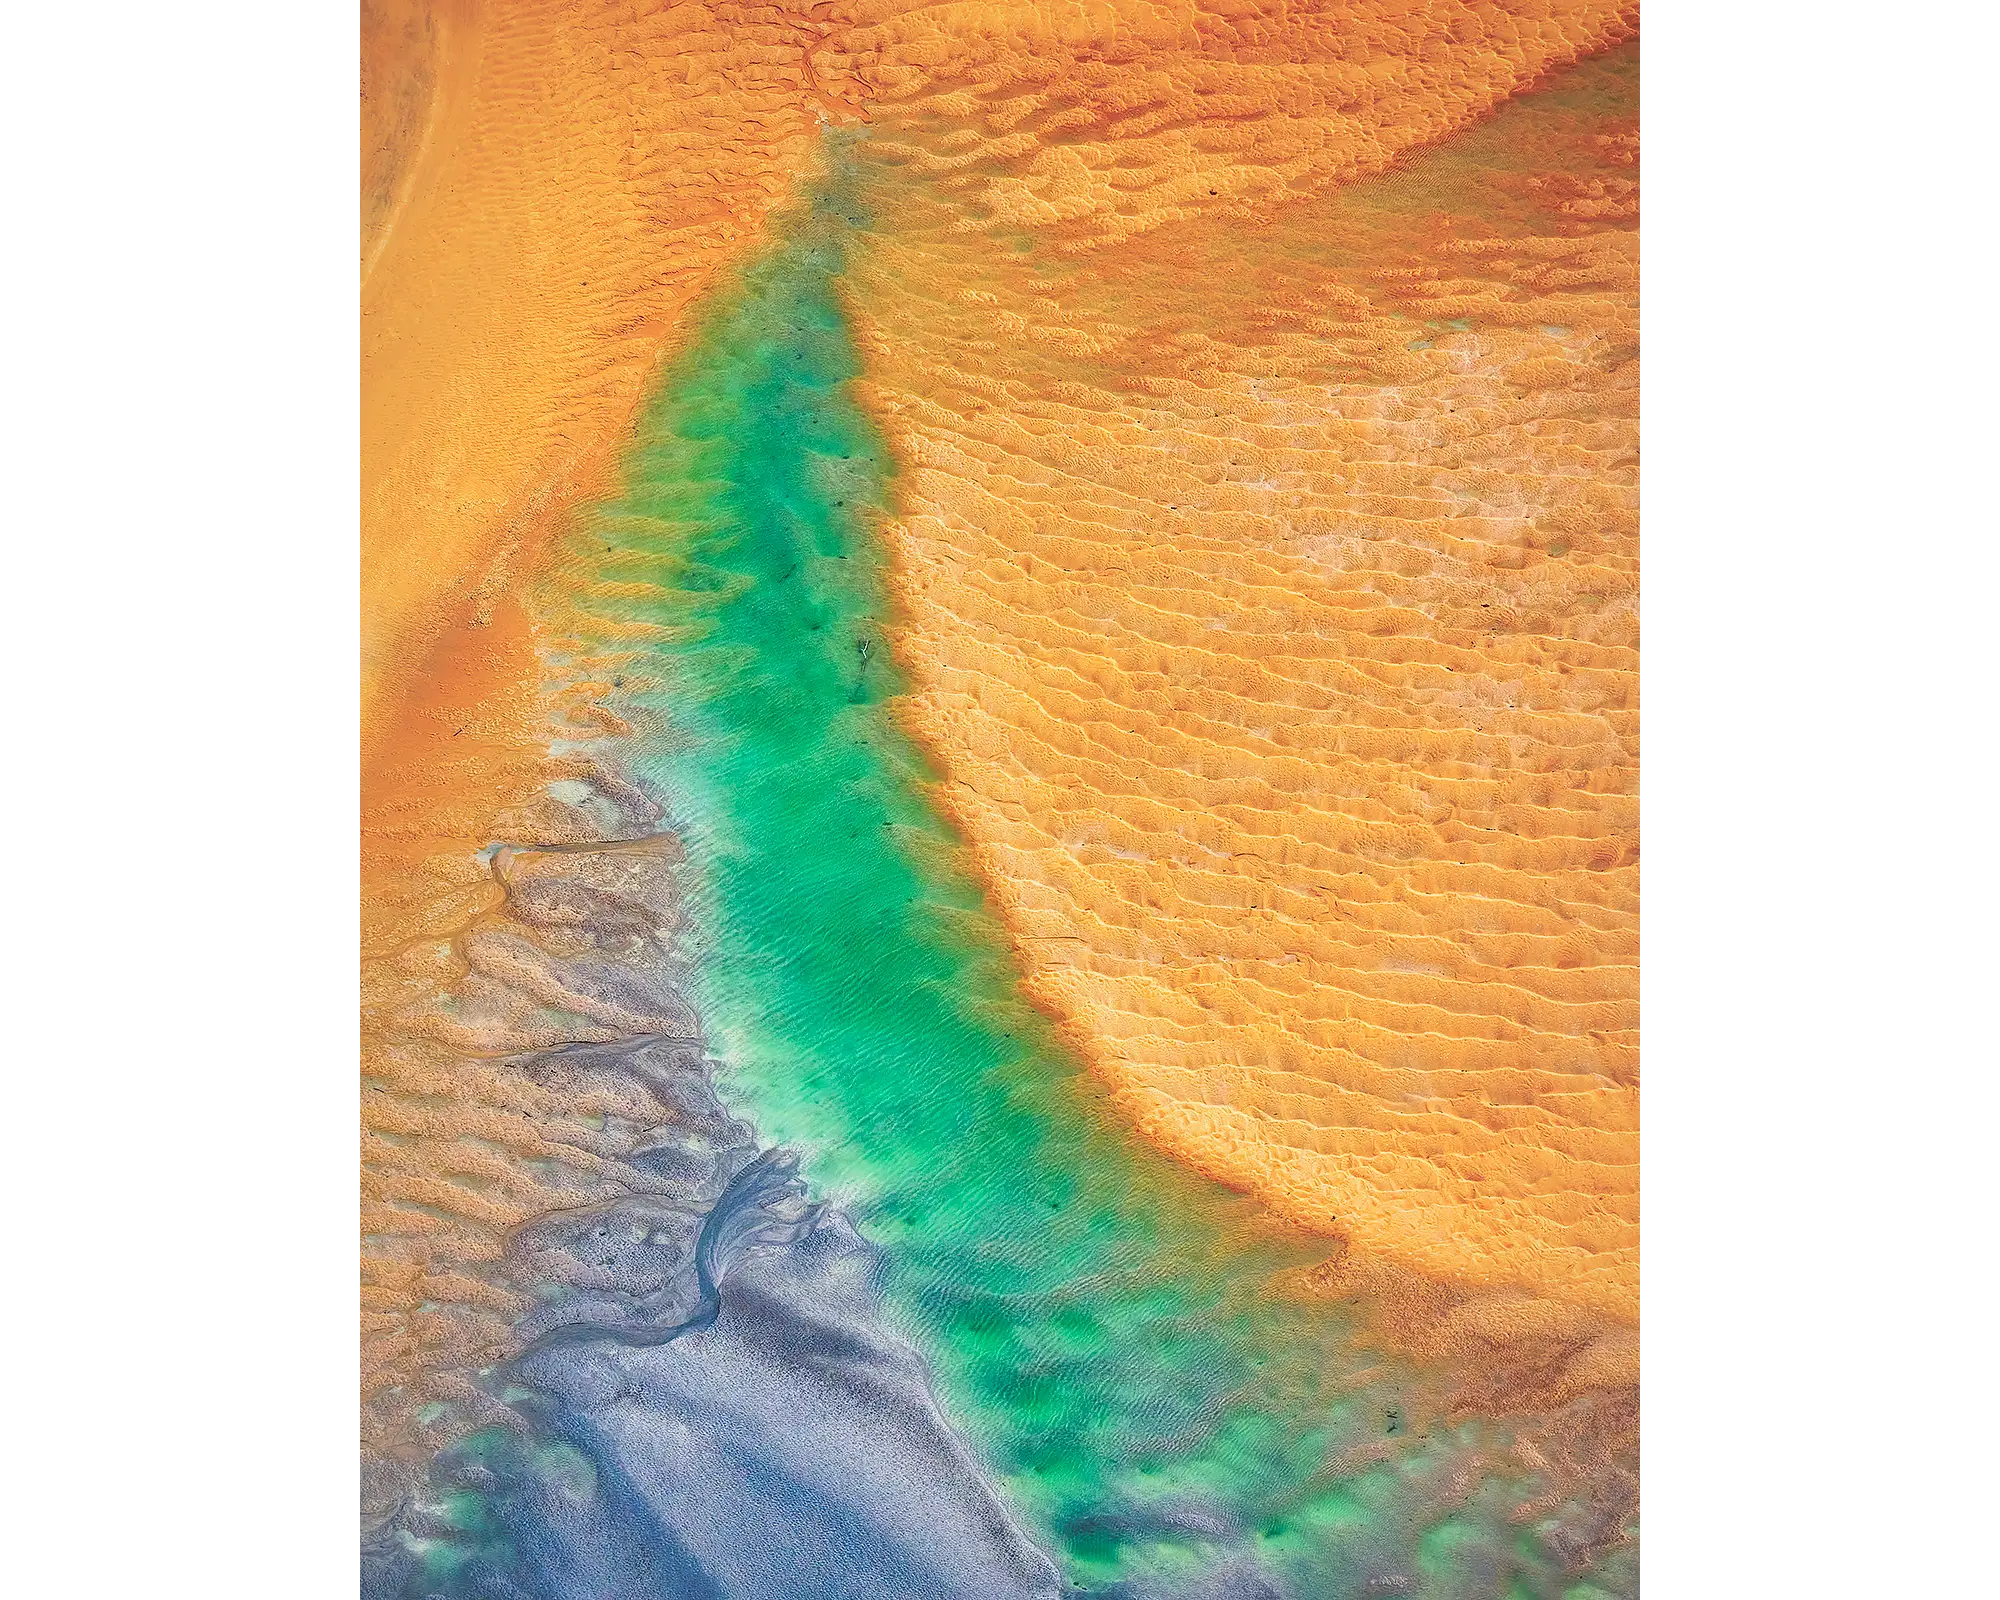 Opal Illusion. Aerial view of tidal patterns, Roebuck Bay, The Kimberley, Western Australia.